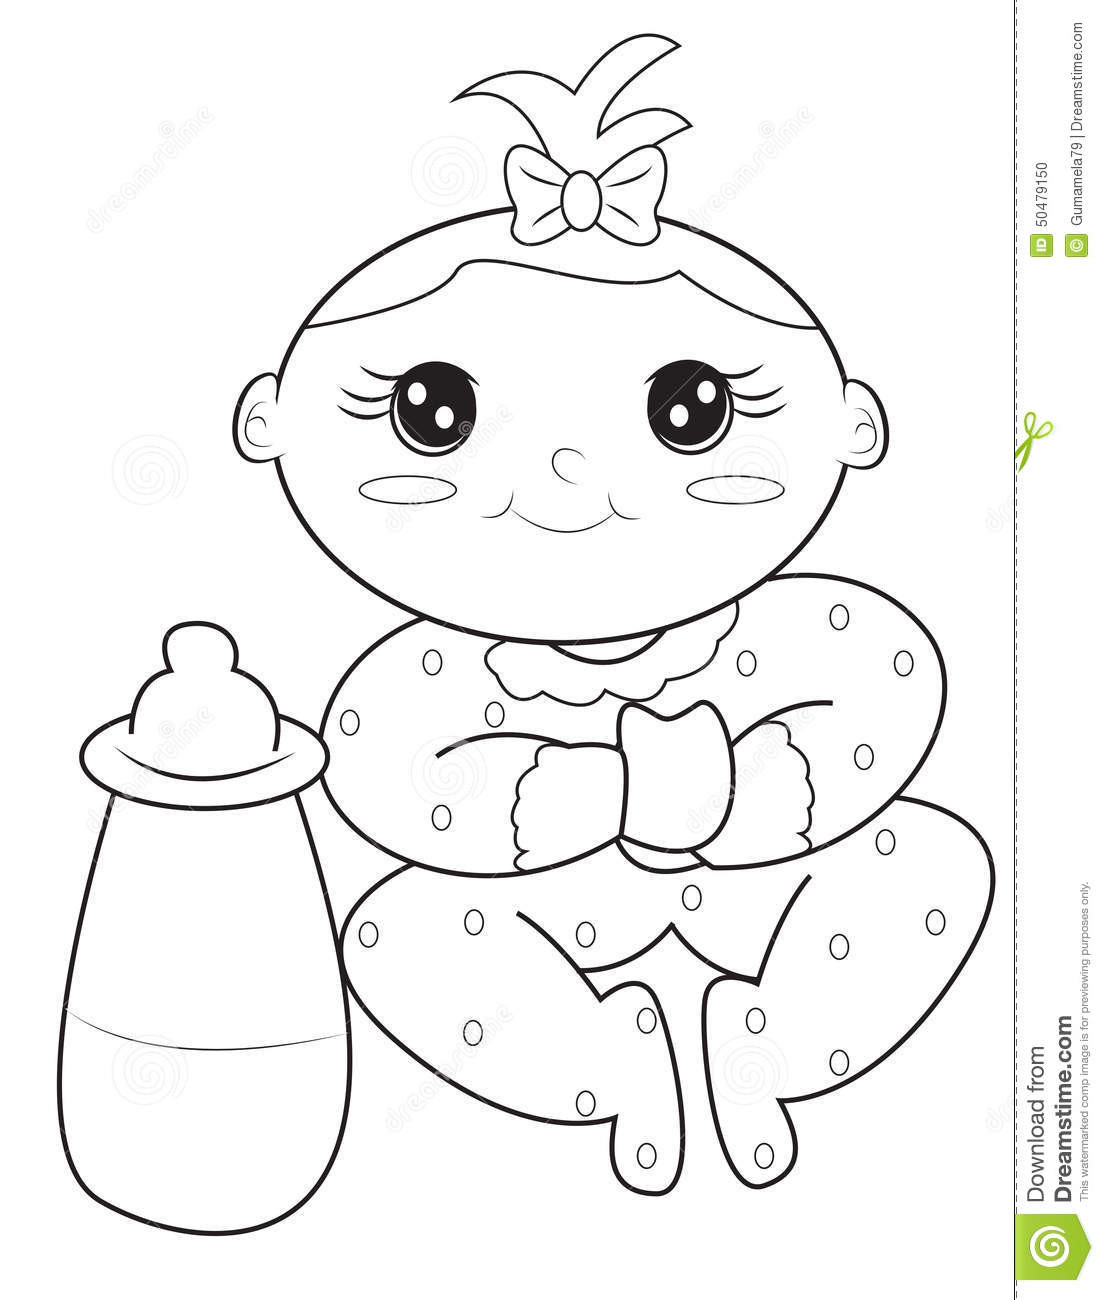 Baby Girl Coloring Pages
 Baby girl coloring page stock illustration Illustration